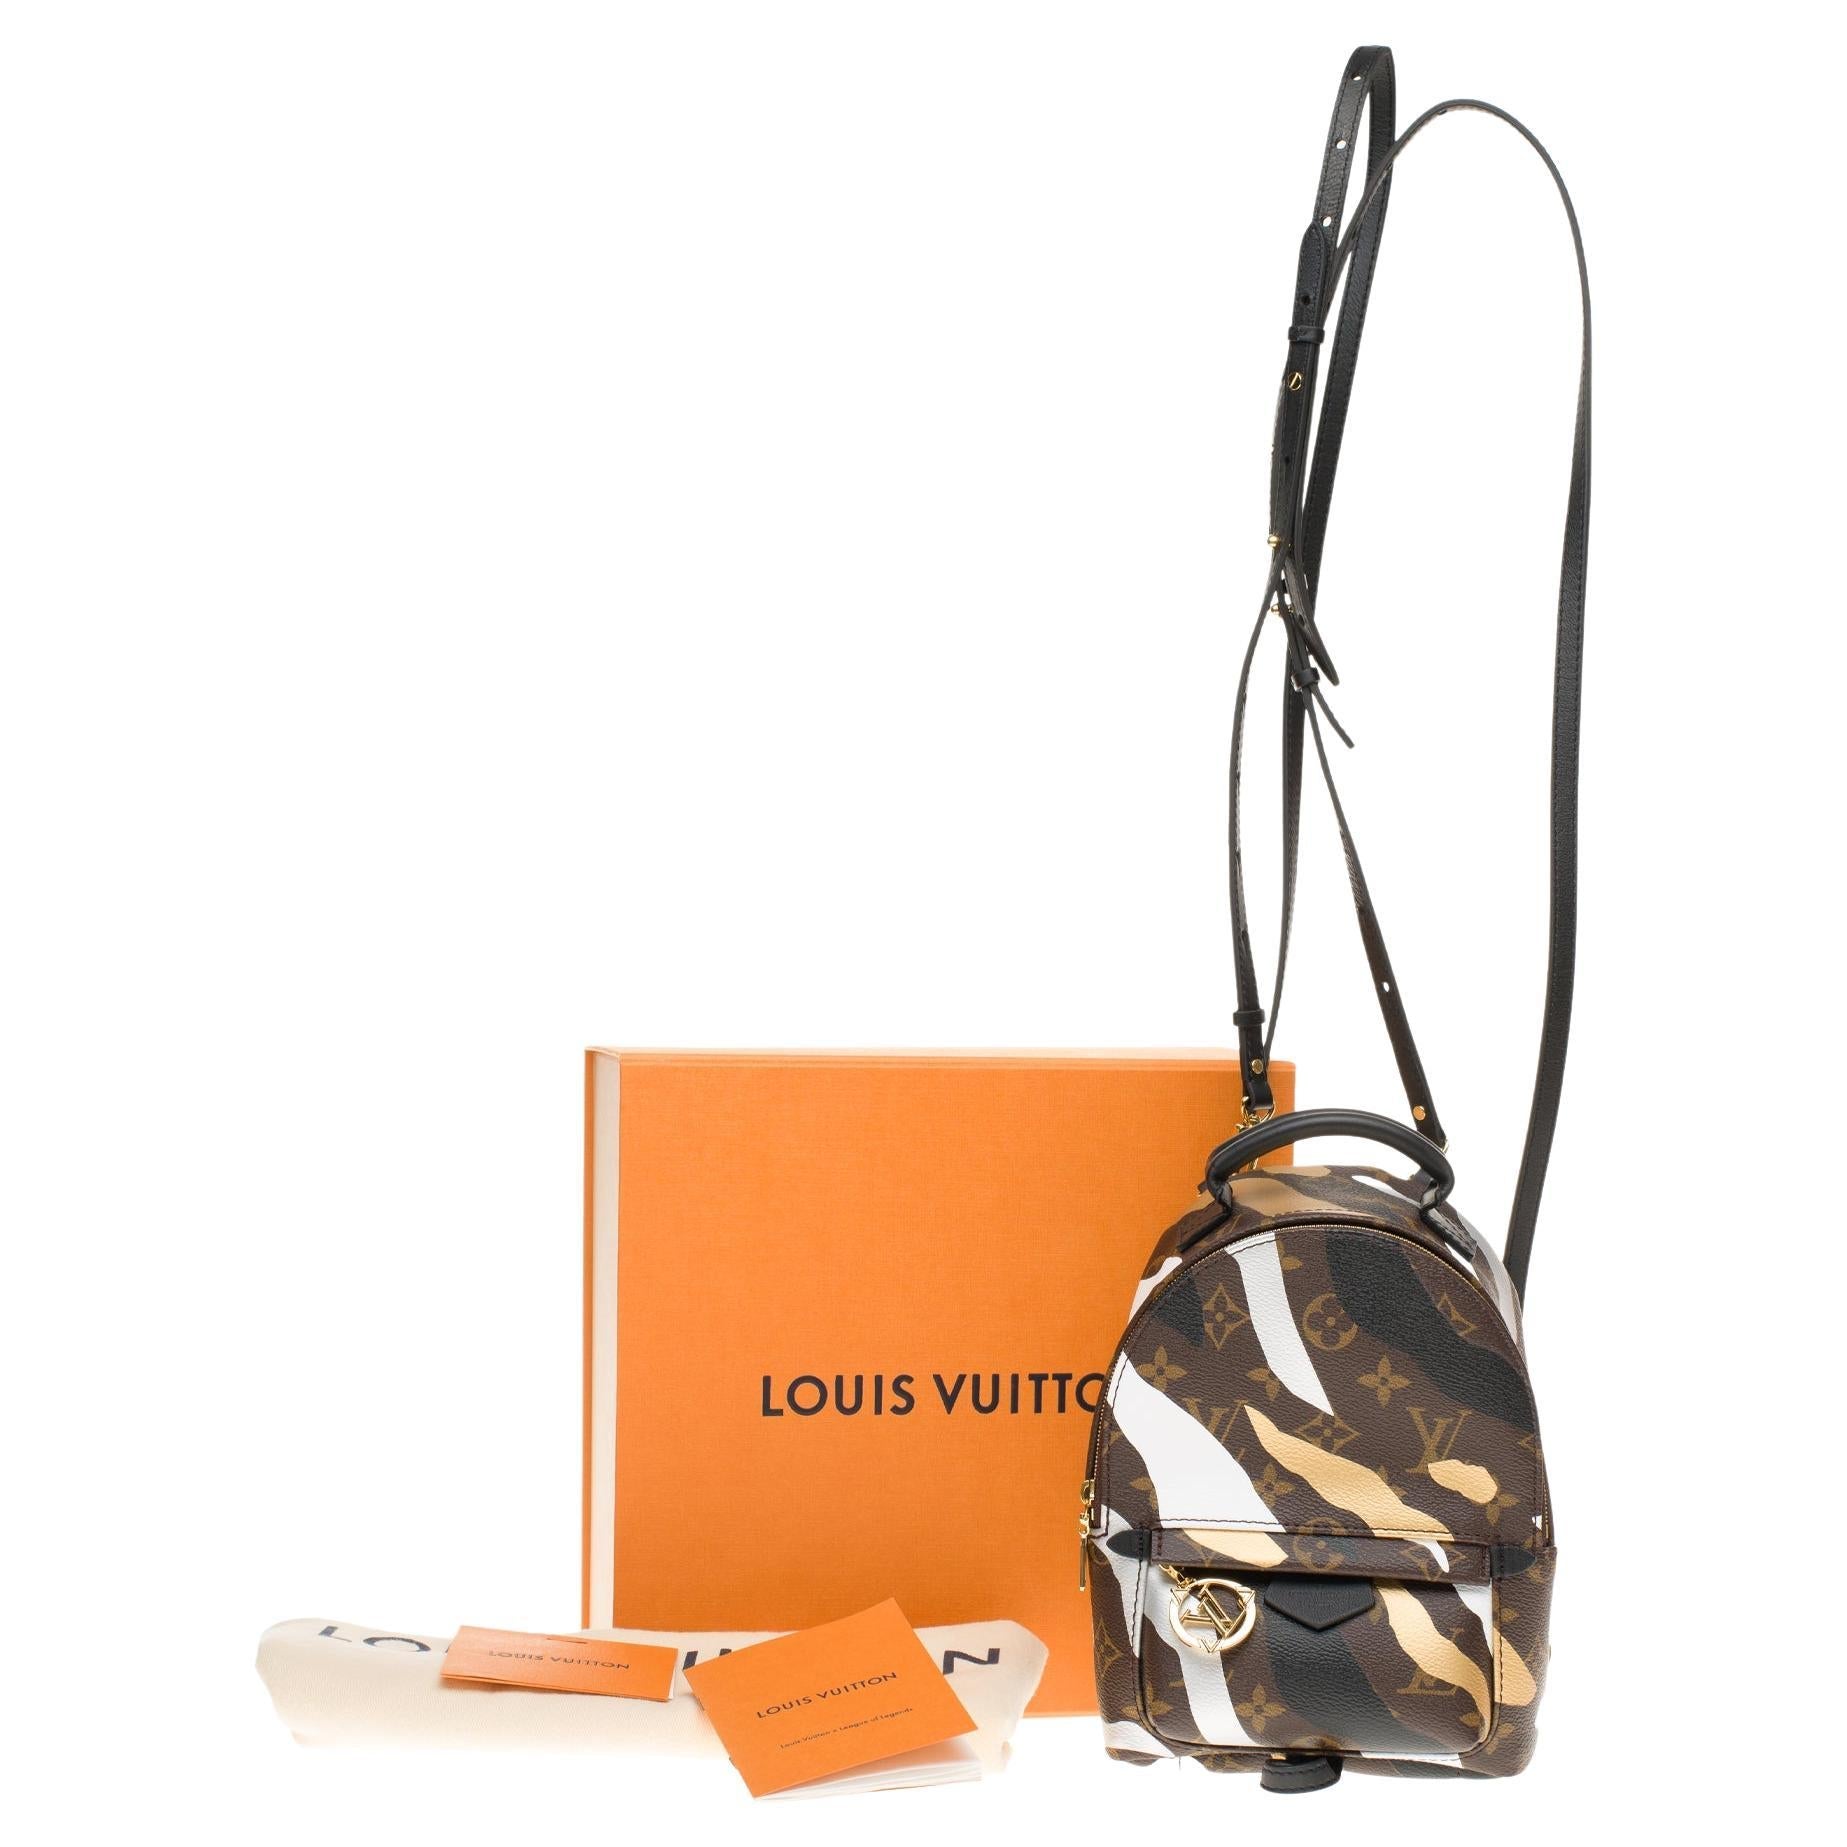 LOUIS VUITTON | Chalk Sling Bag | Monogram Limited Edition